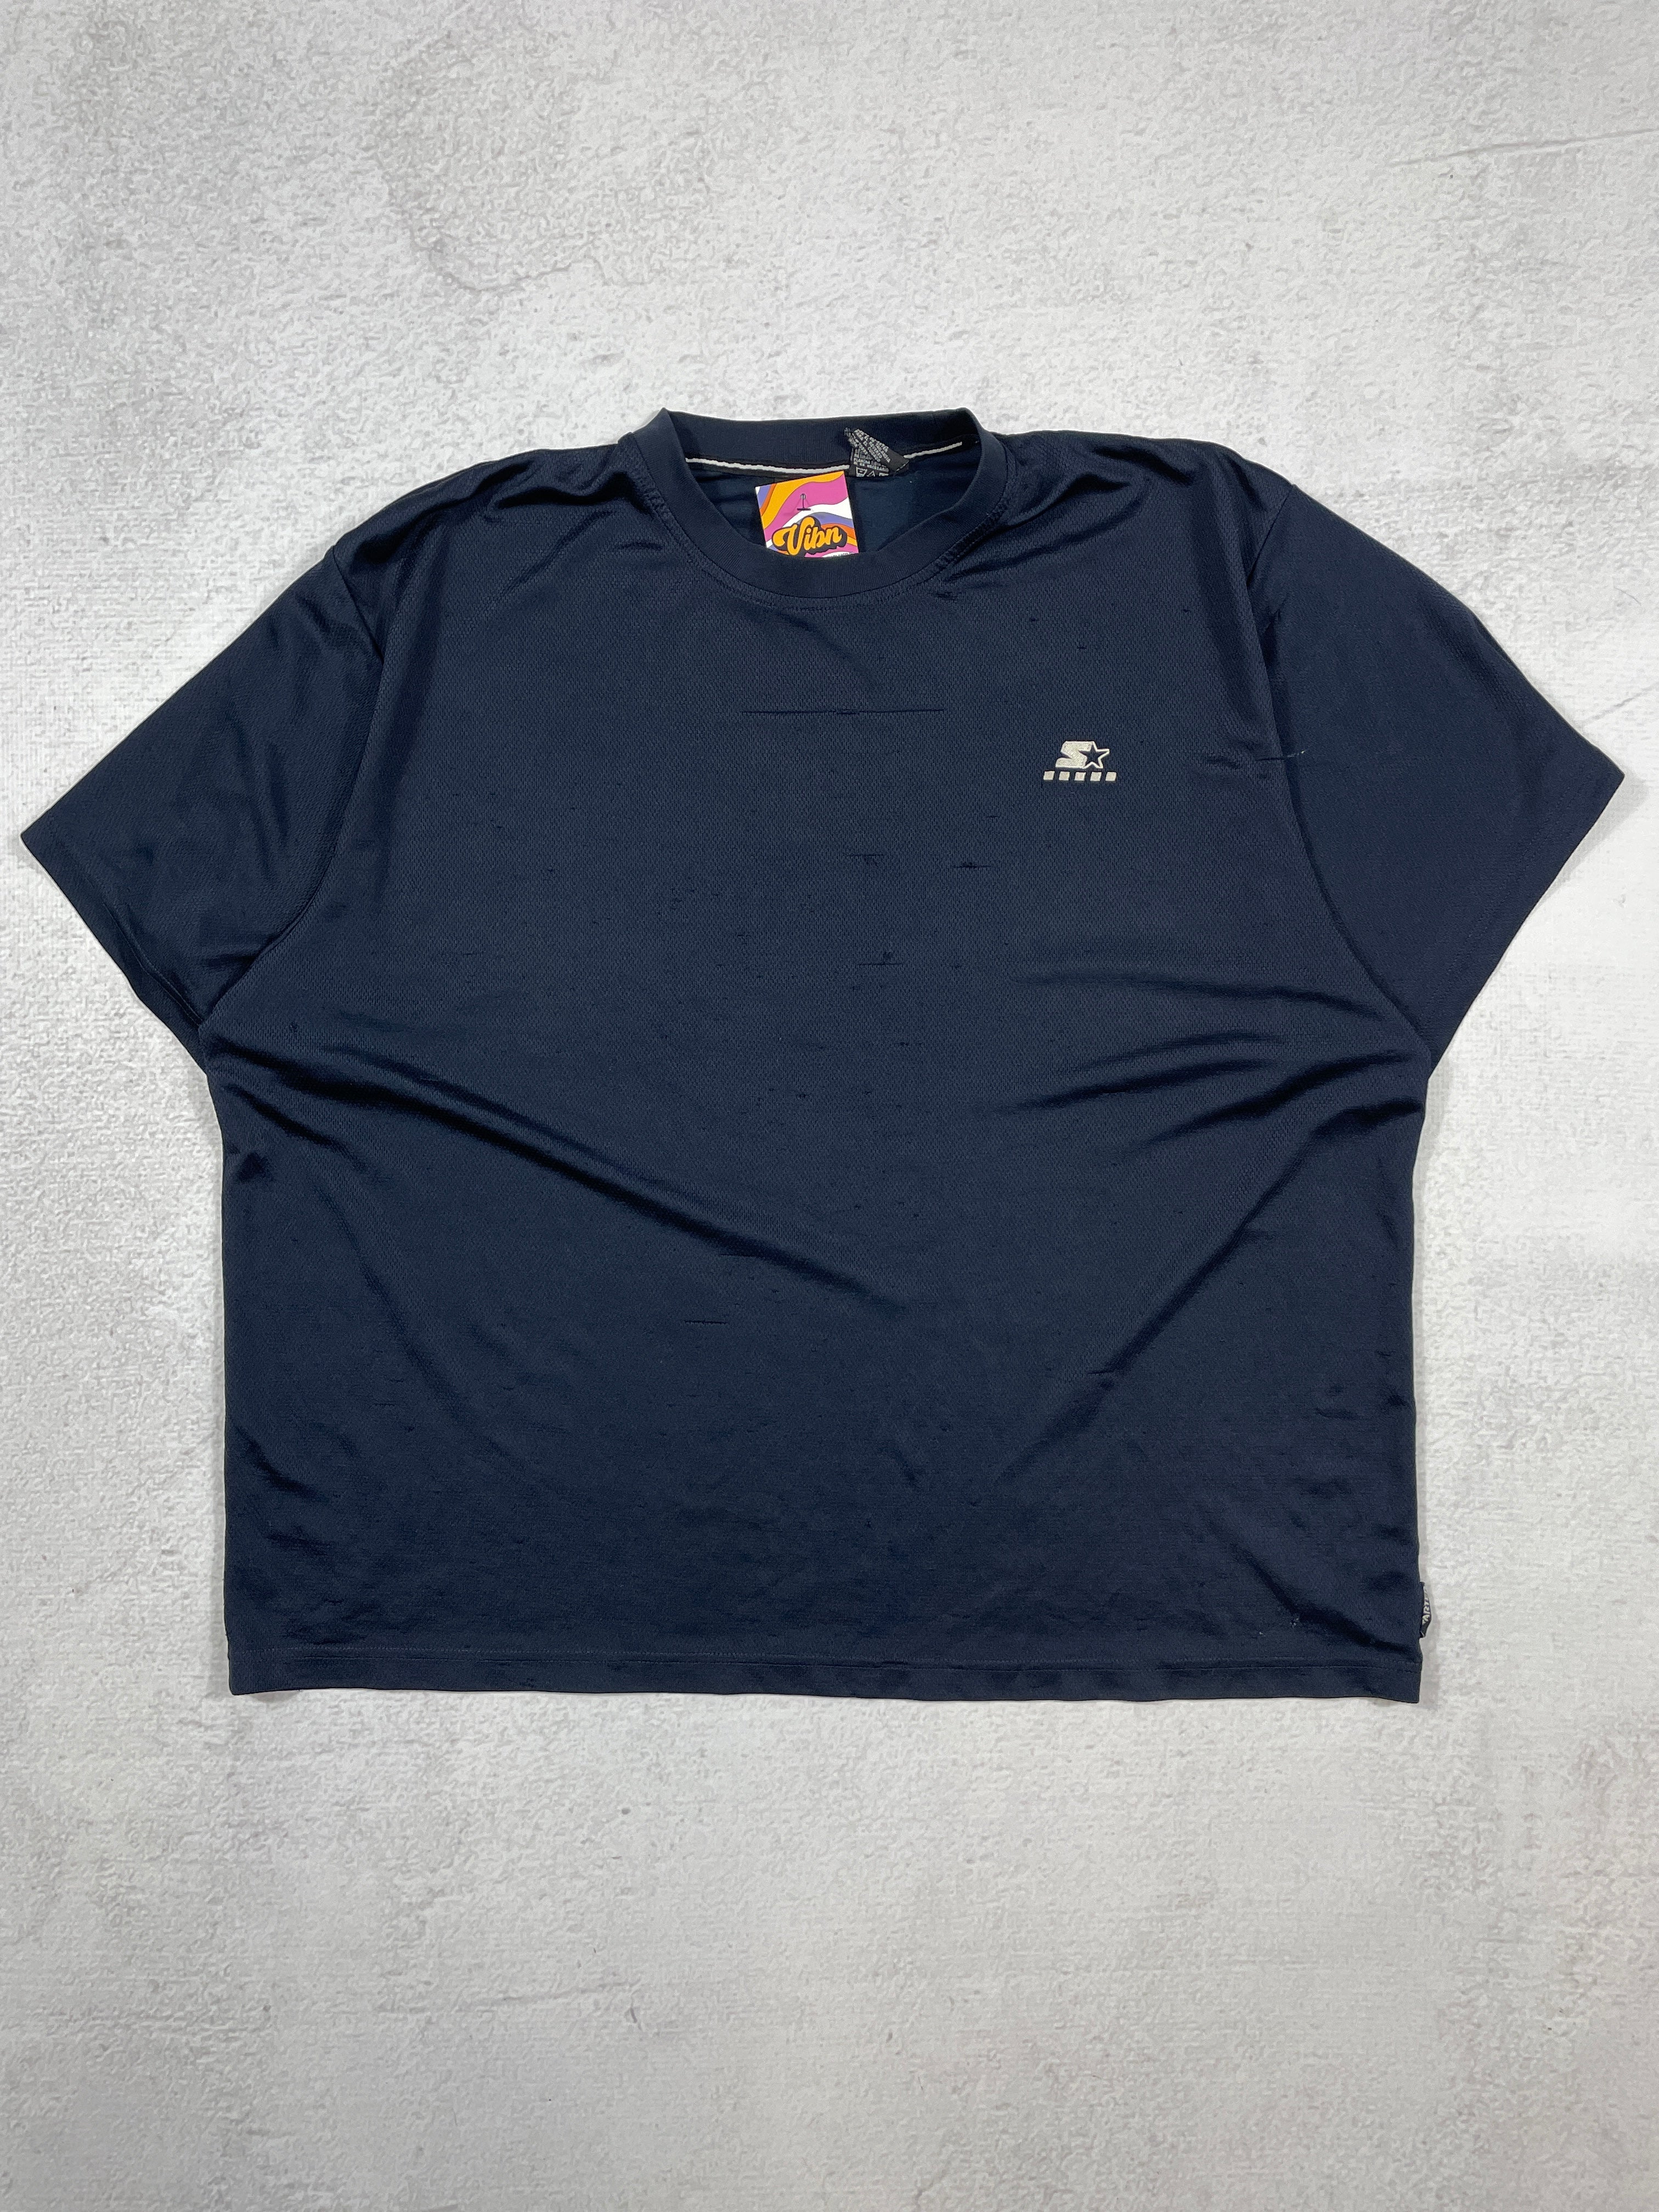 Vintage Starter Jersey T-Shirt - Men's 2XL